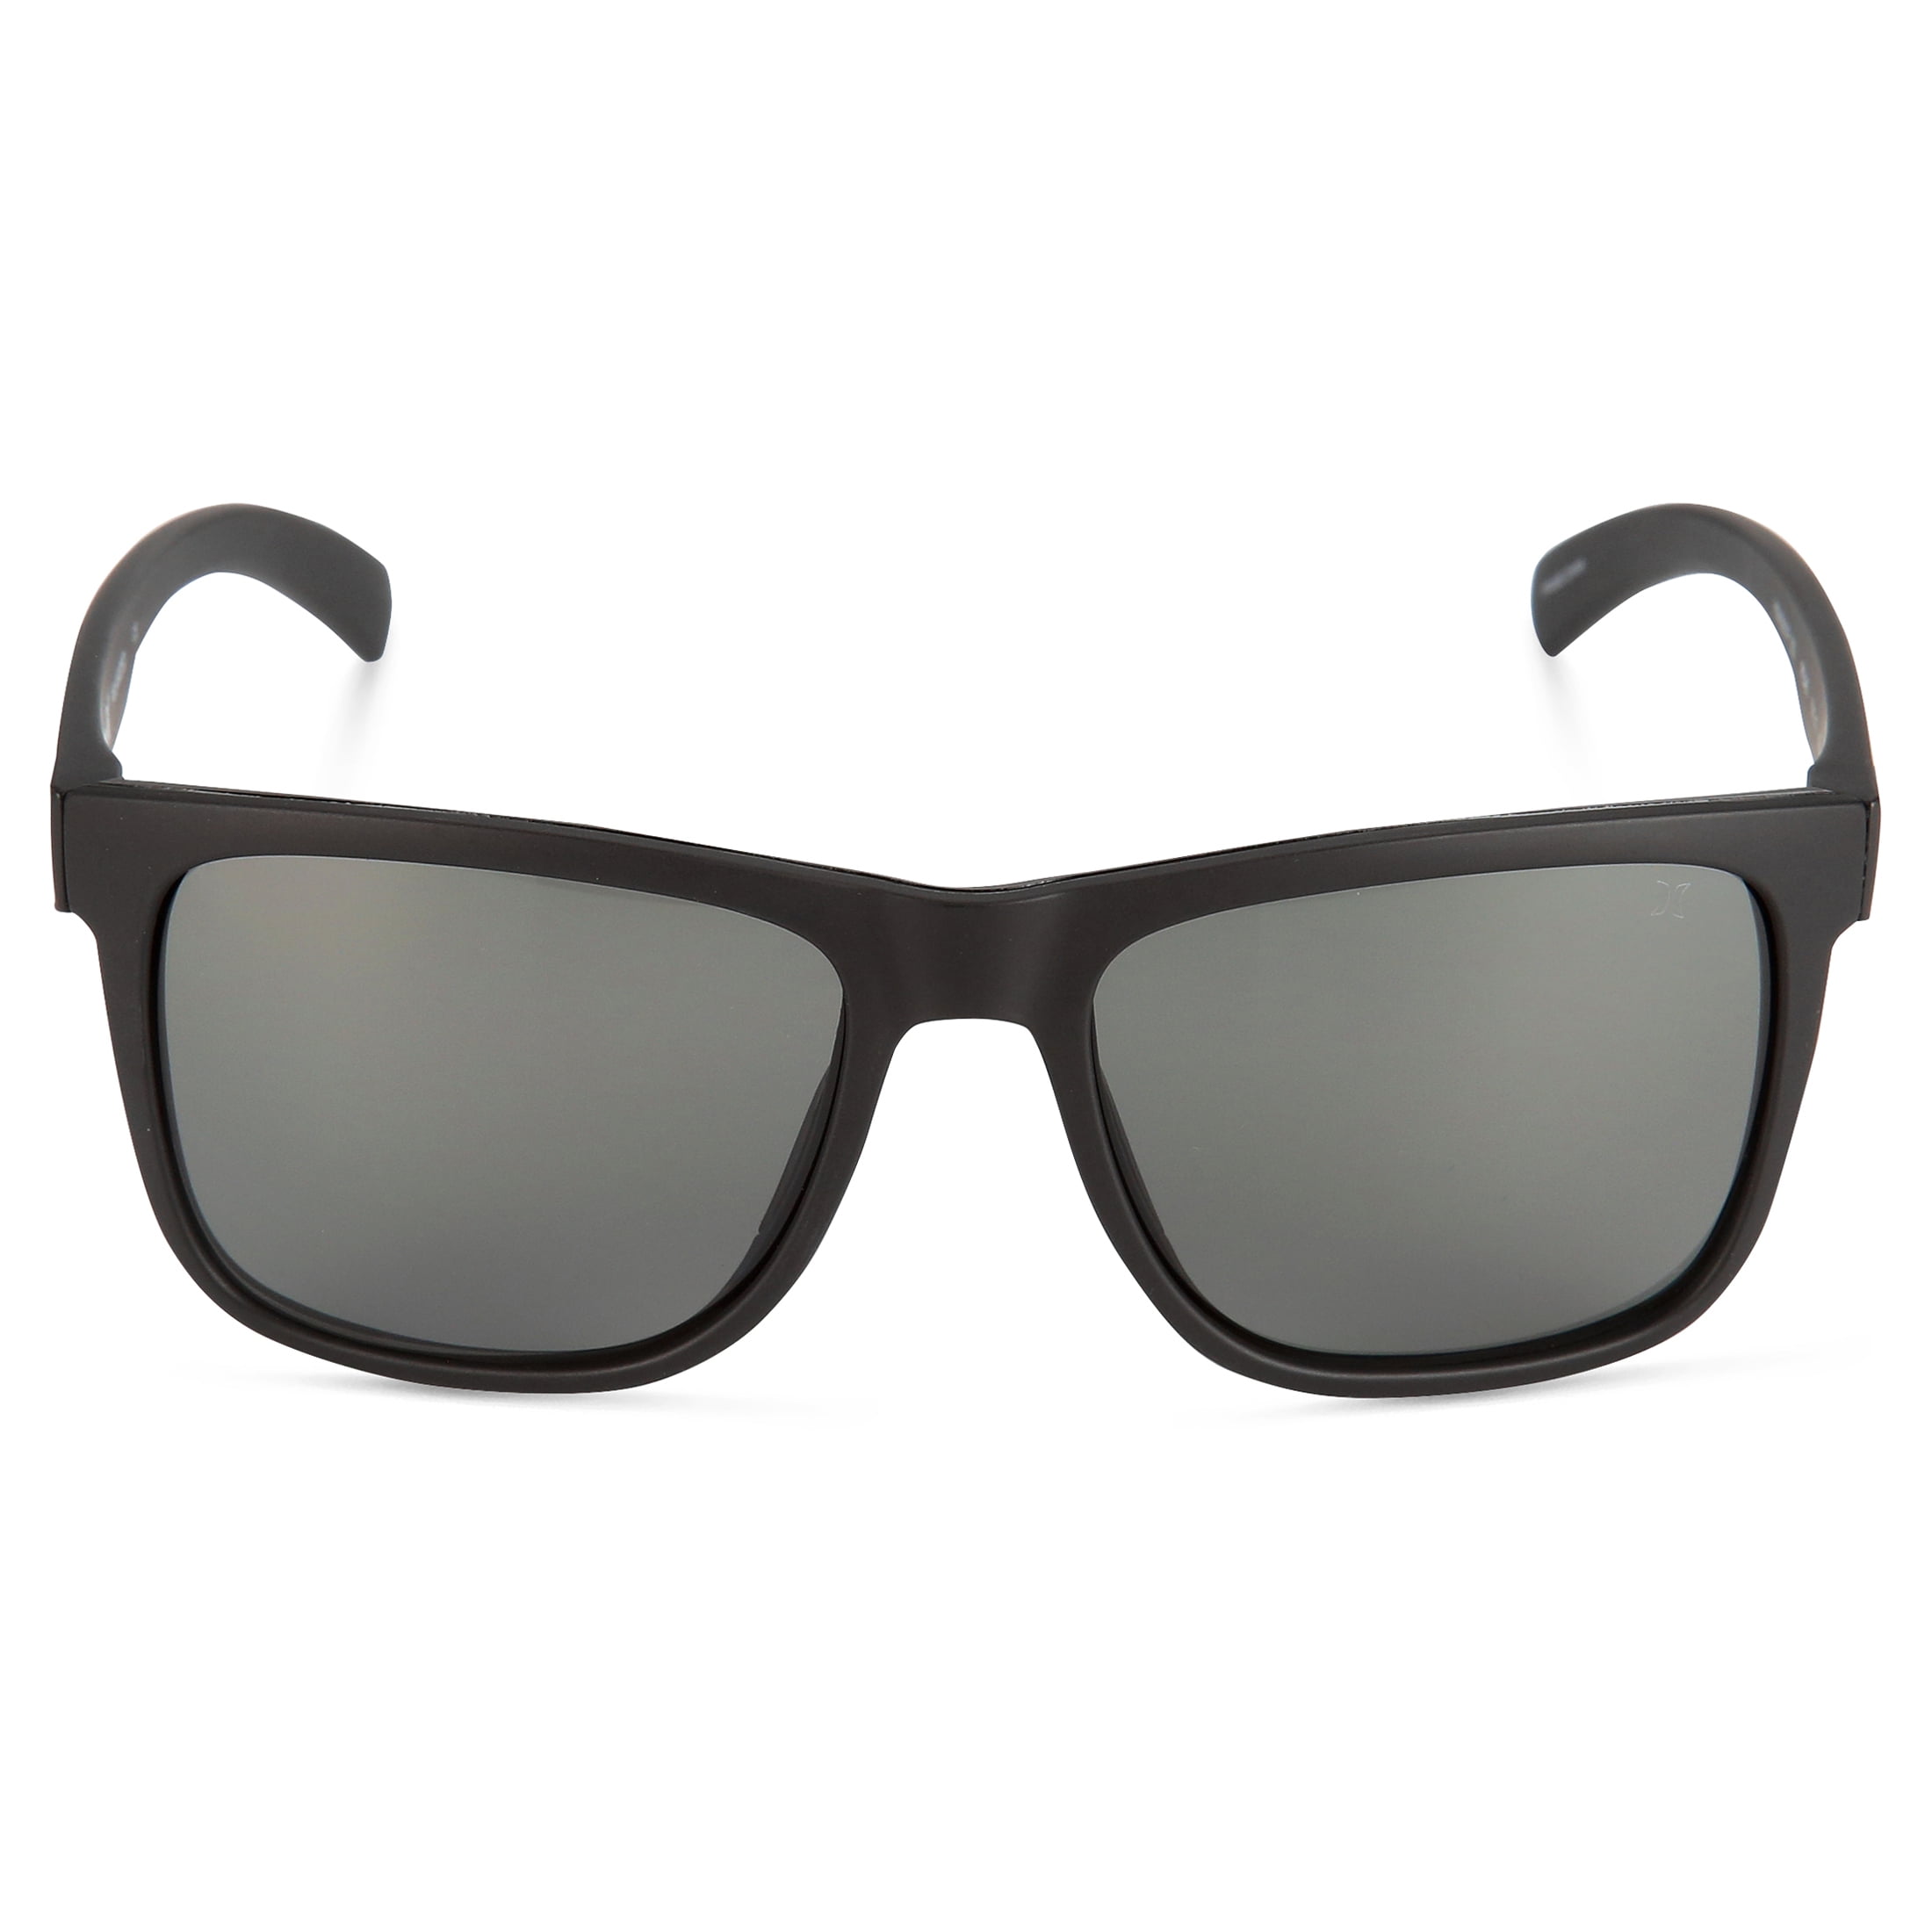 Men's Sunglasses, Polarized Sunglasses